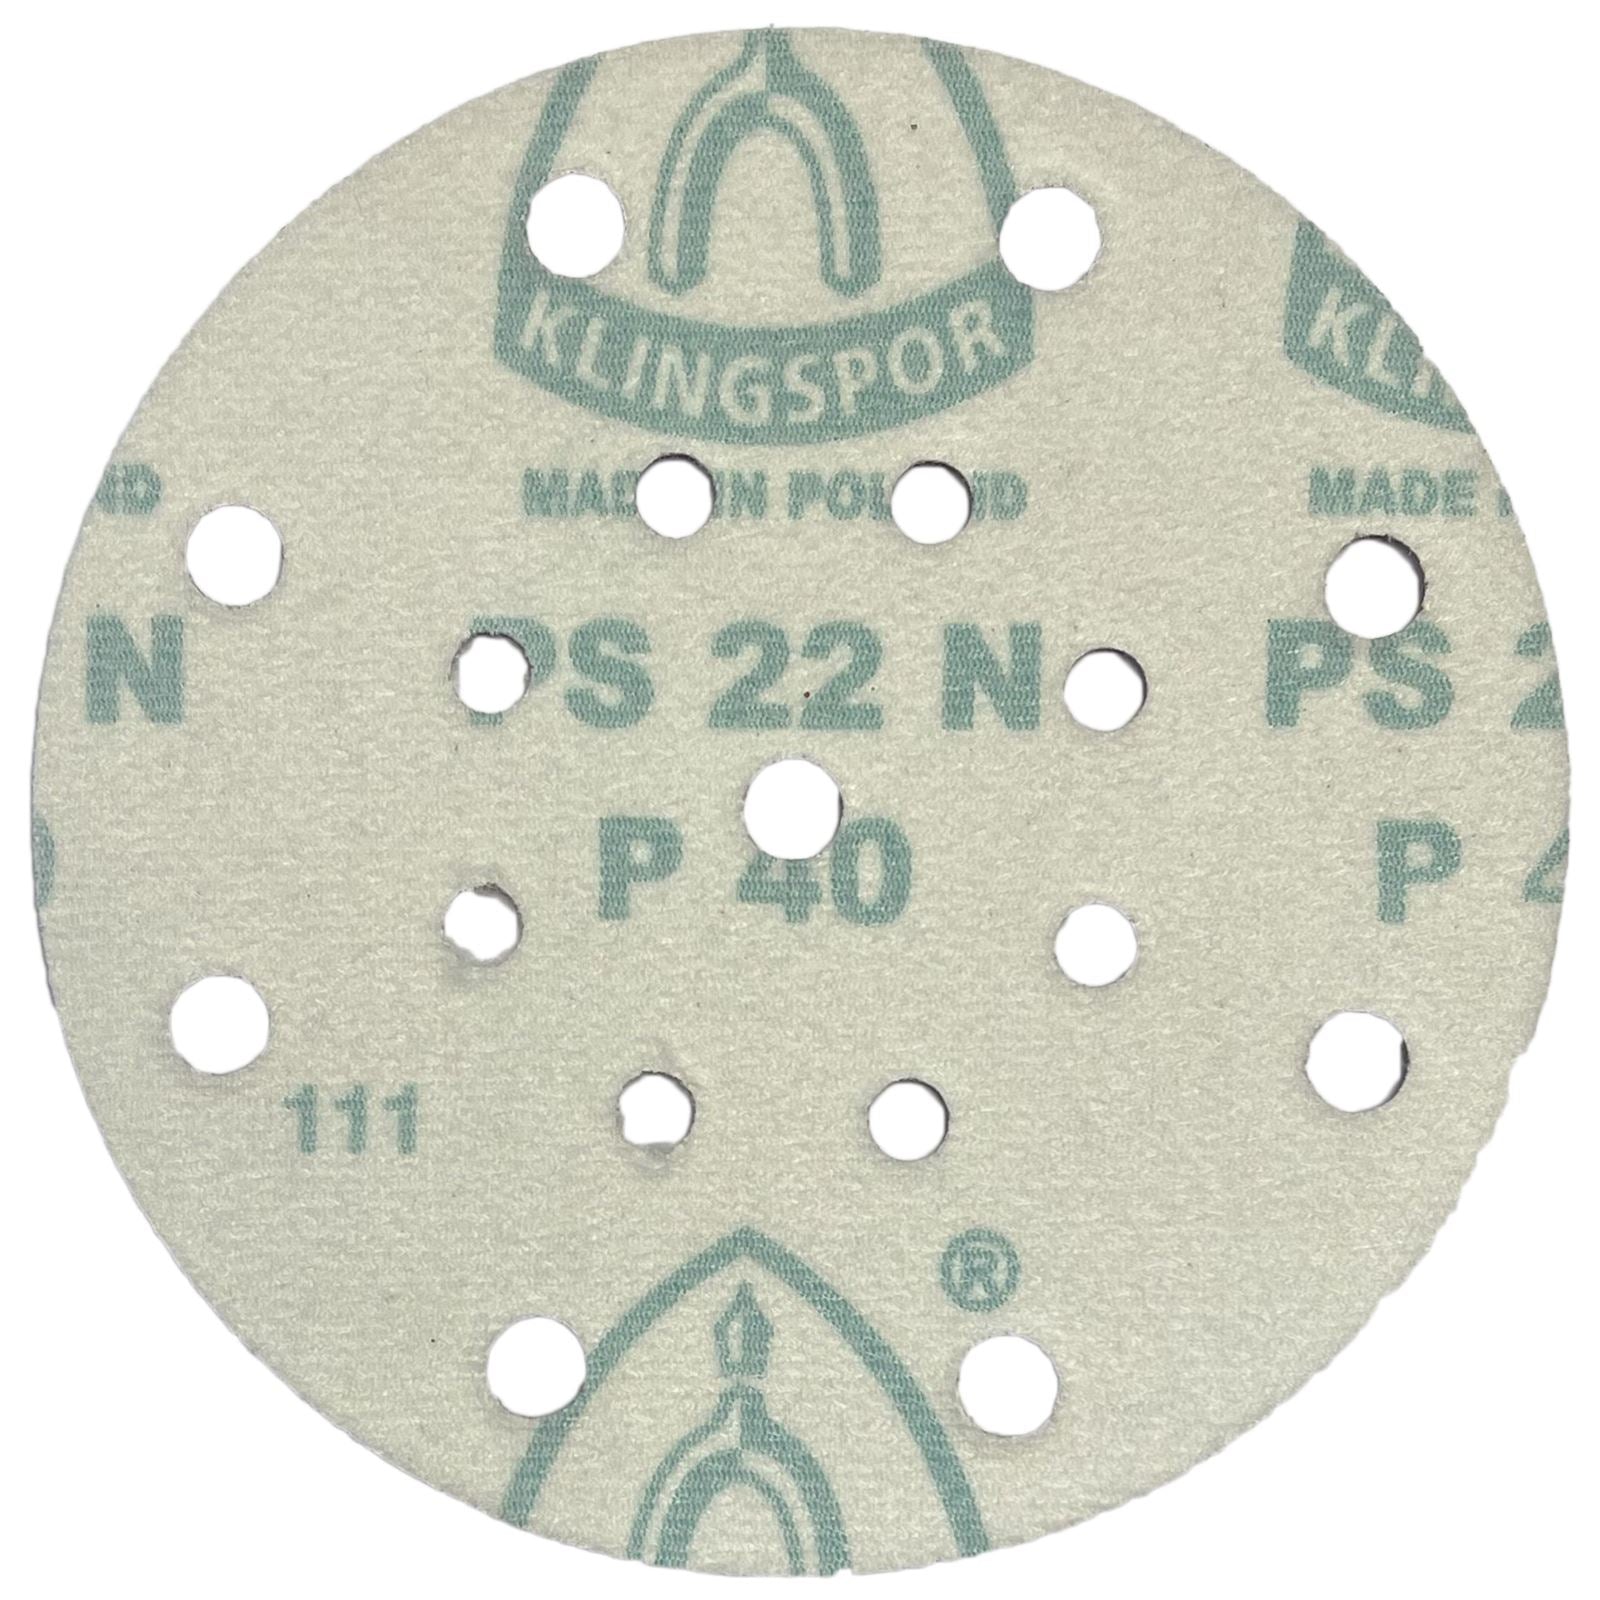 Klingspor Sanding Discs Hook and Loop 150mm PS22K GLS51 Hole Pattern 40-240 Grit